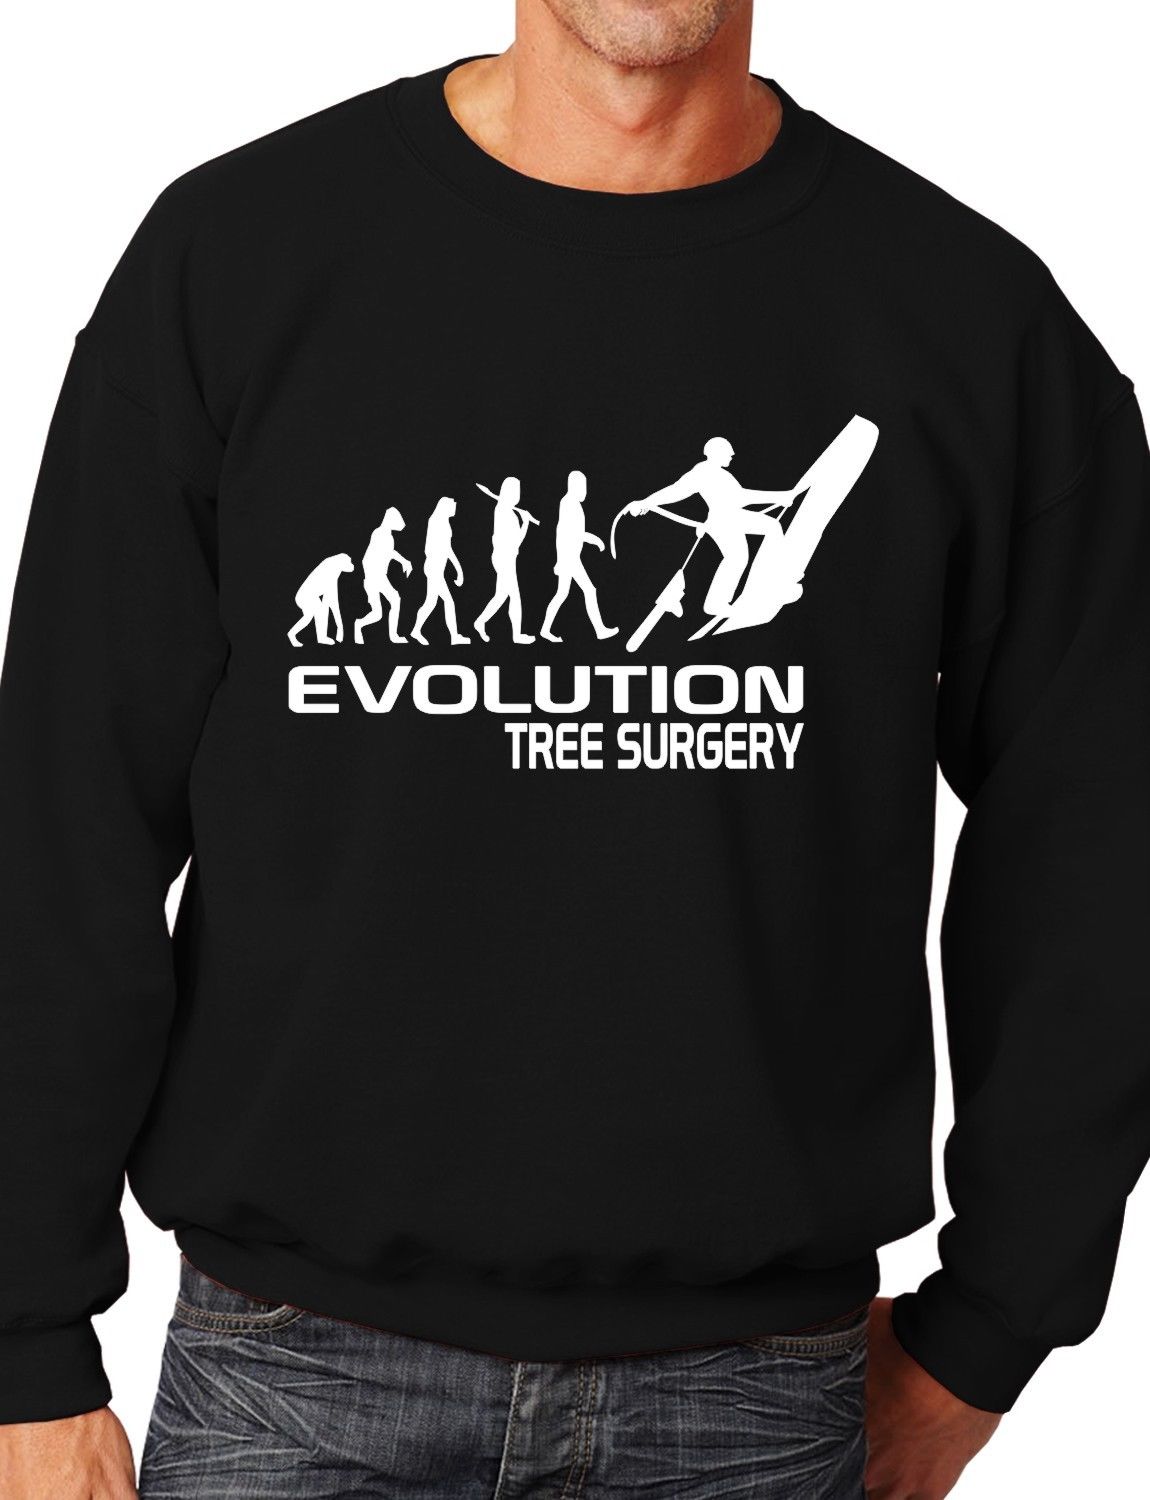 Evolution Of Tree Surgeon Funny Sweatshirt